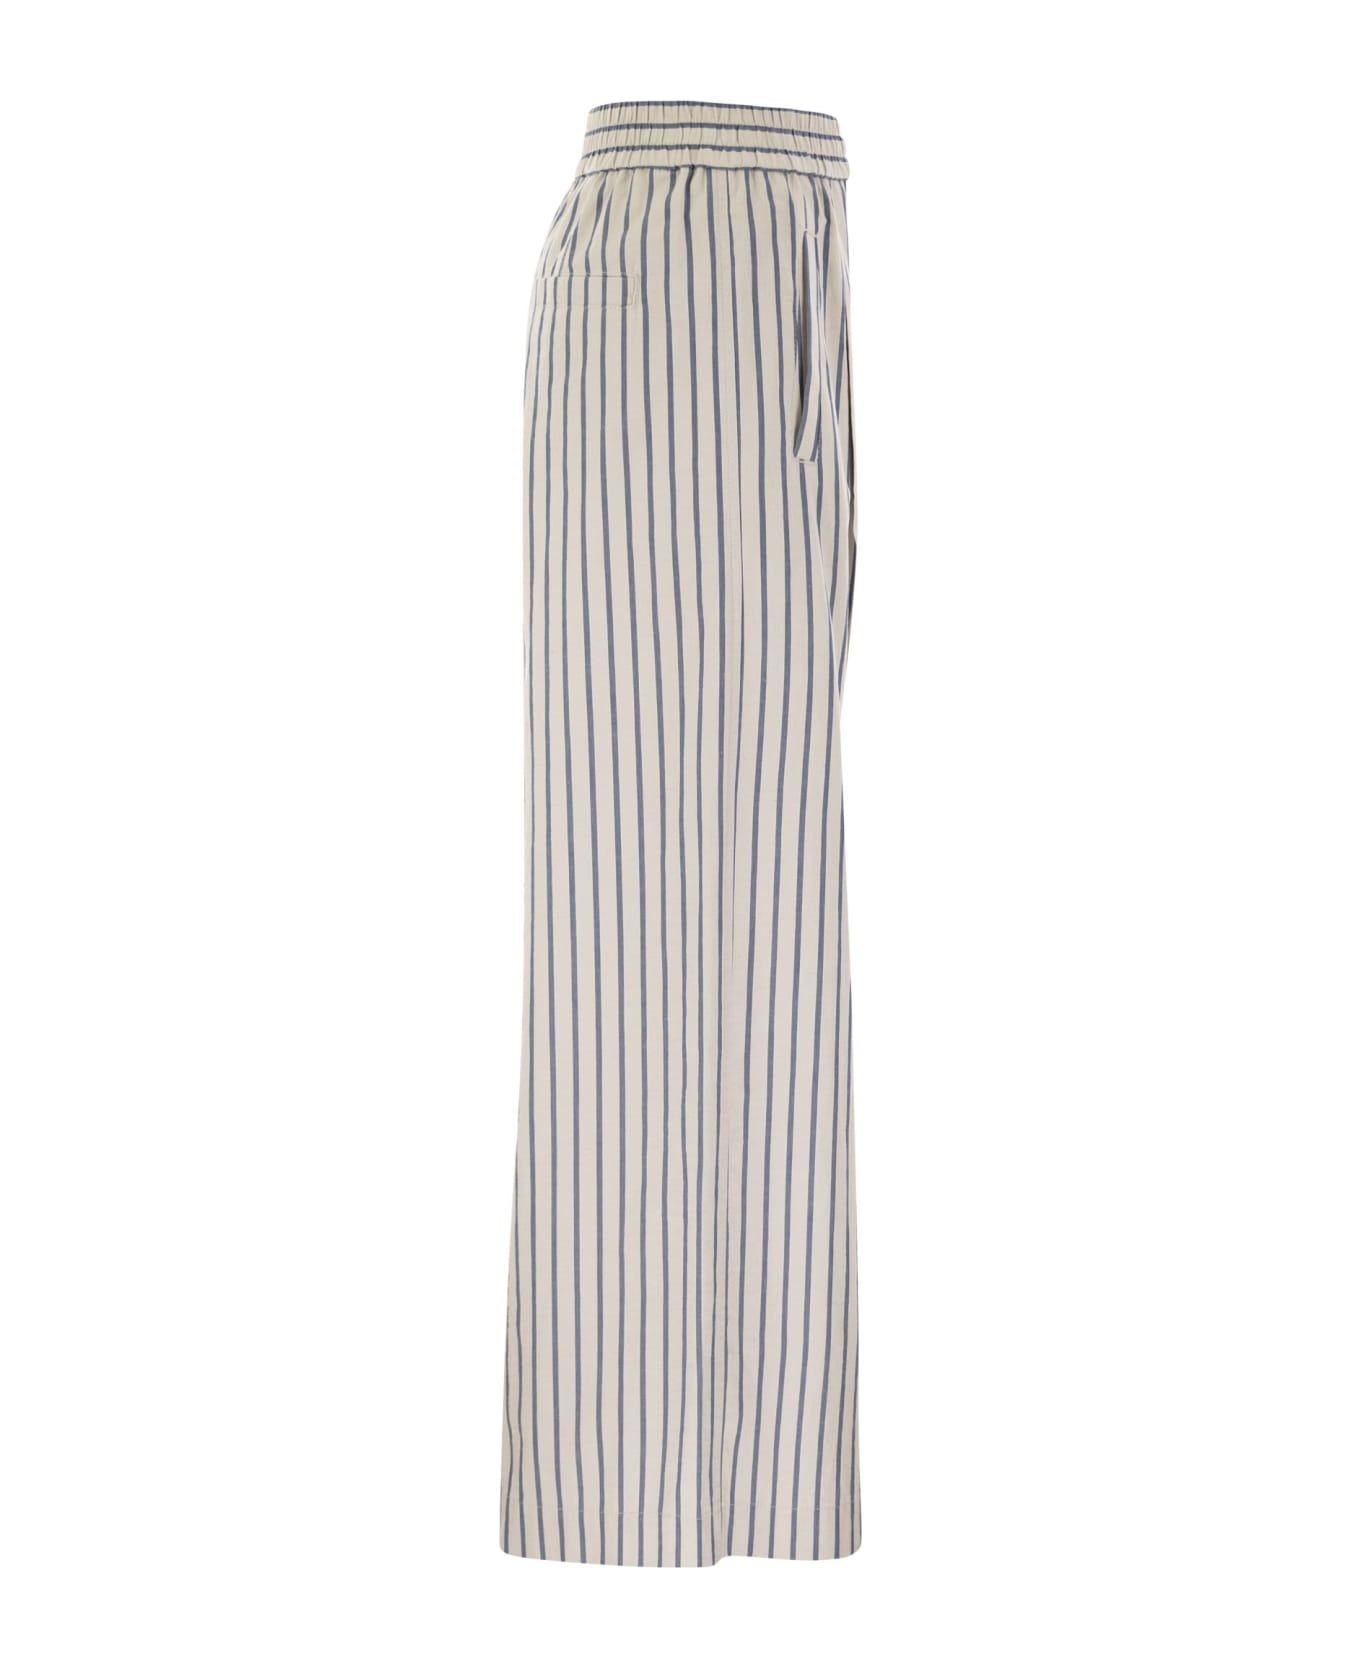 Brunello Cucinelli Loose Track Trousers In Wrinkled Cotton Linen Poplin - Chalk/avio